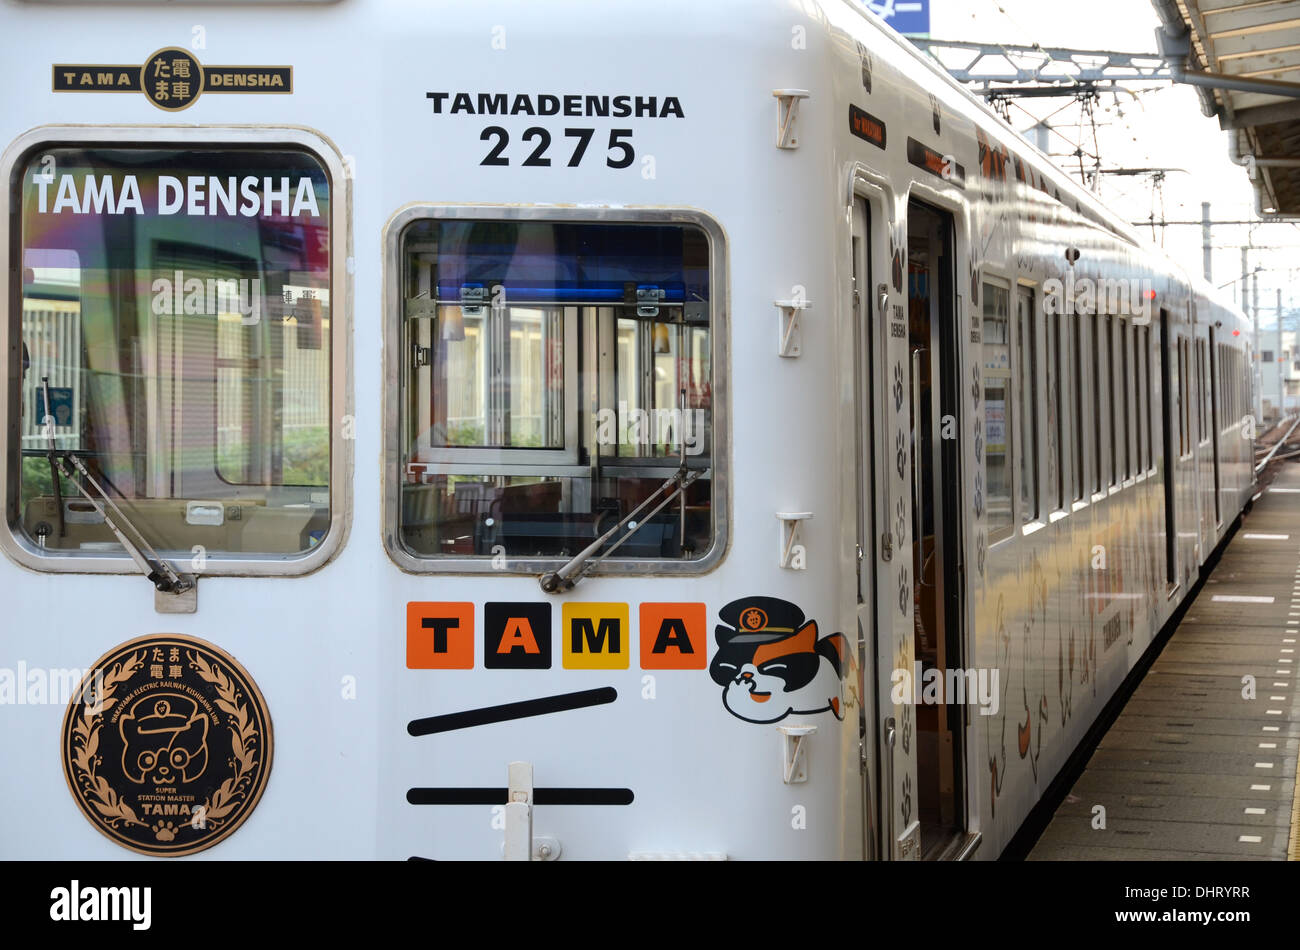 Tama Densha train in Japan Stock Photo